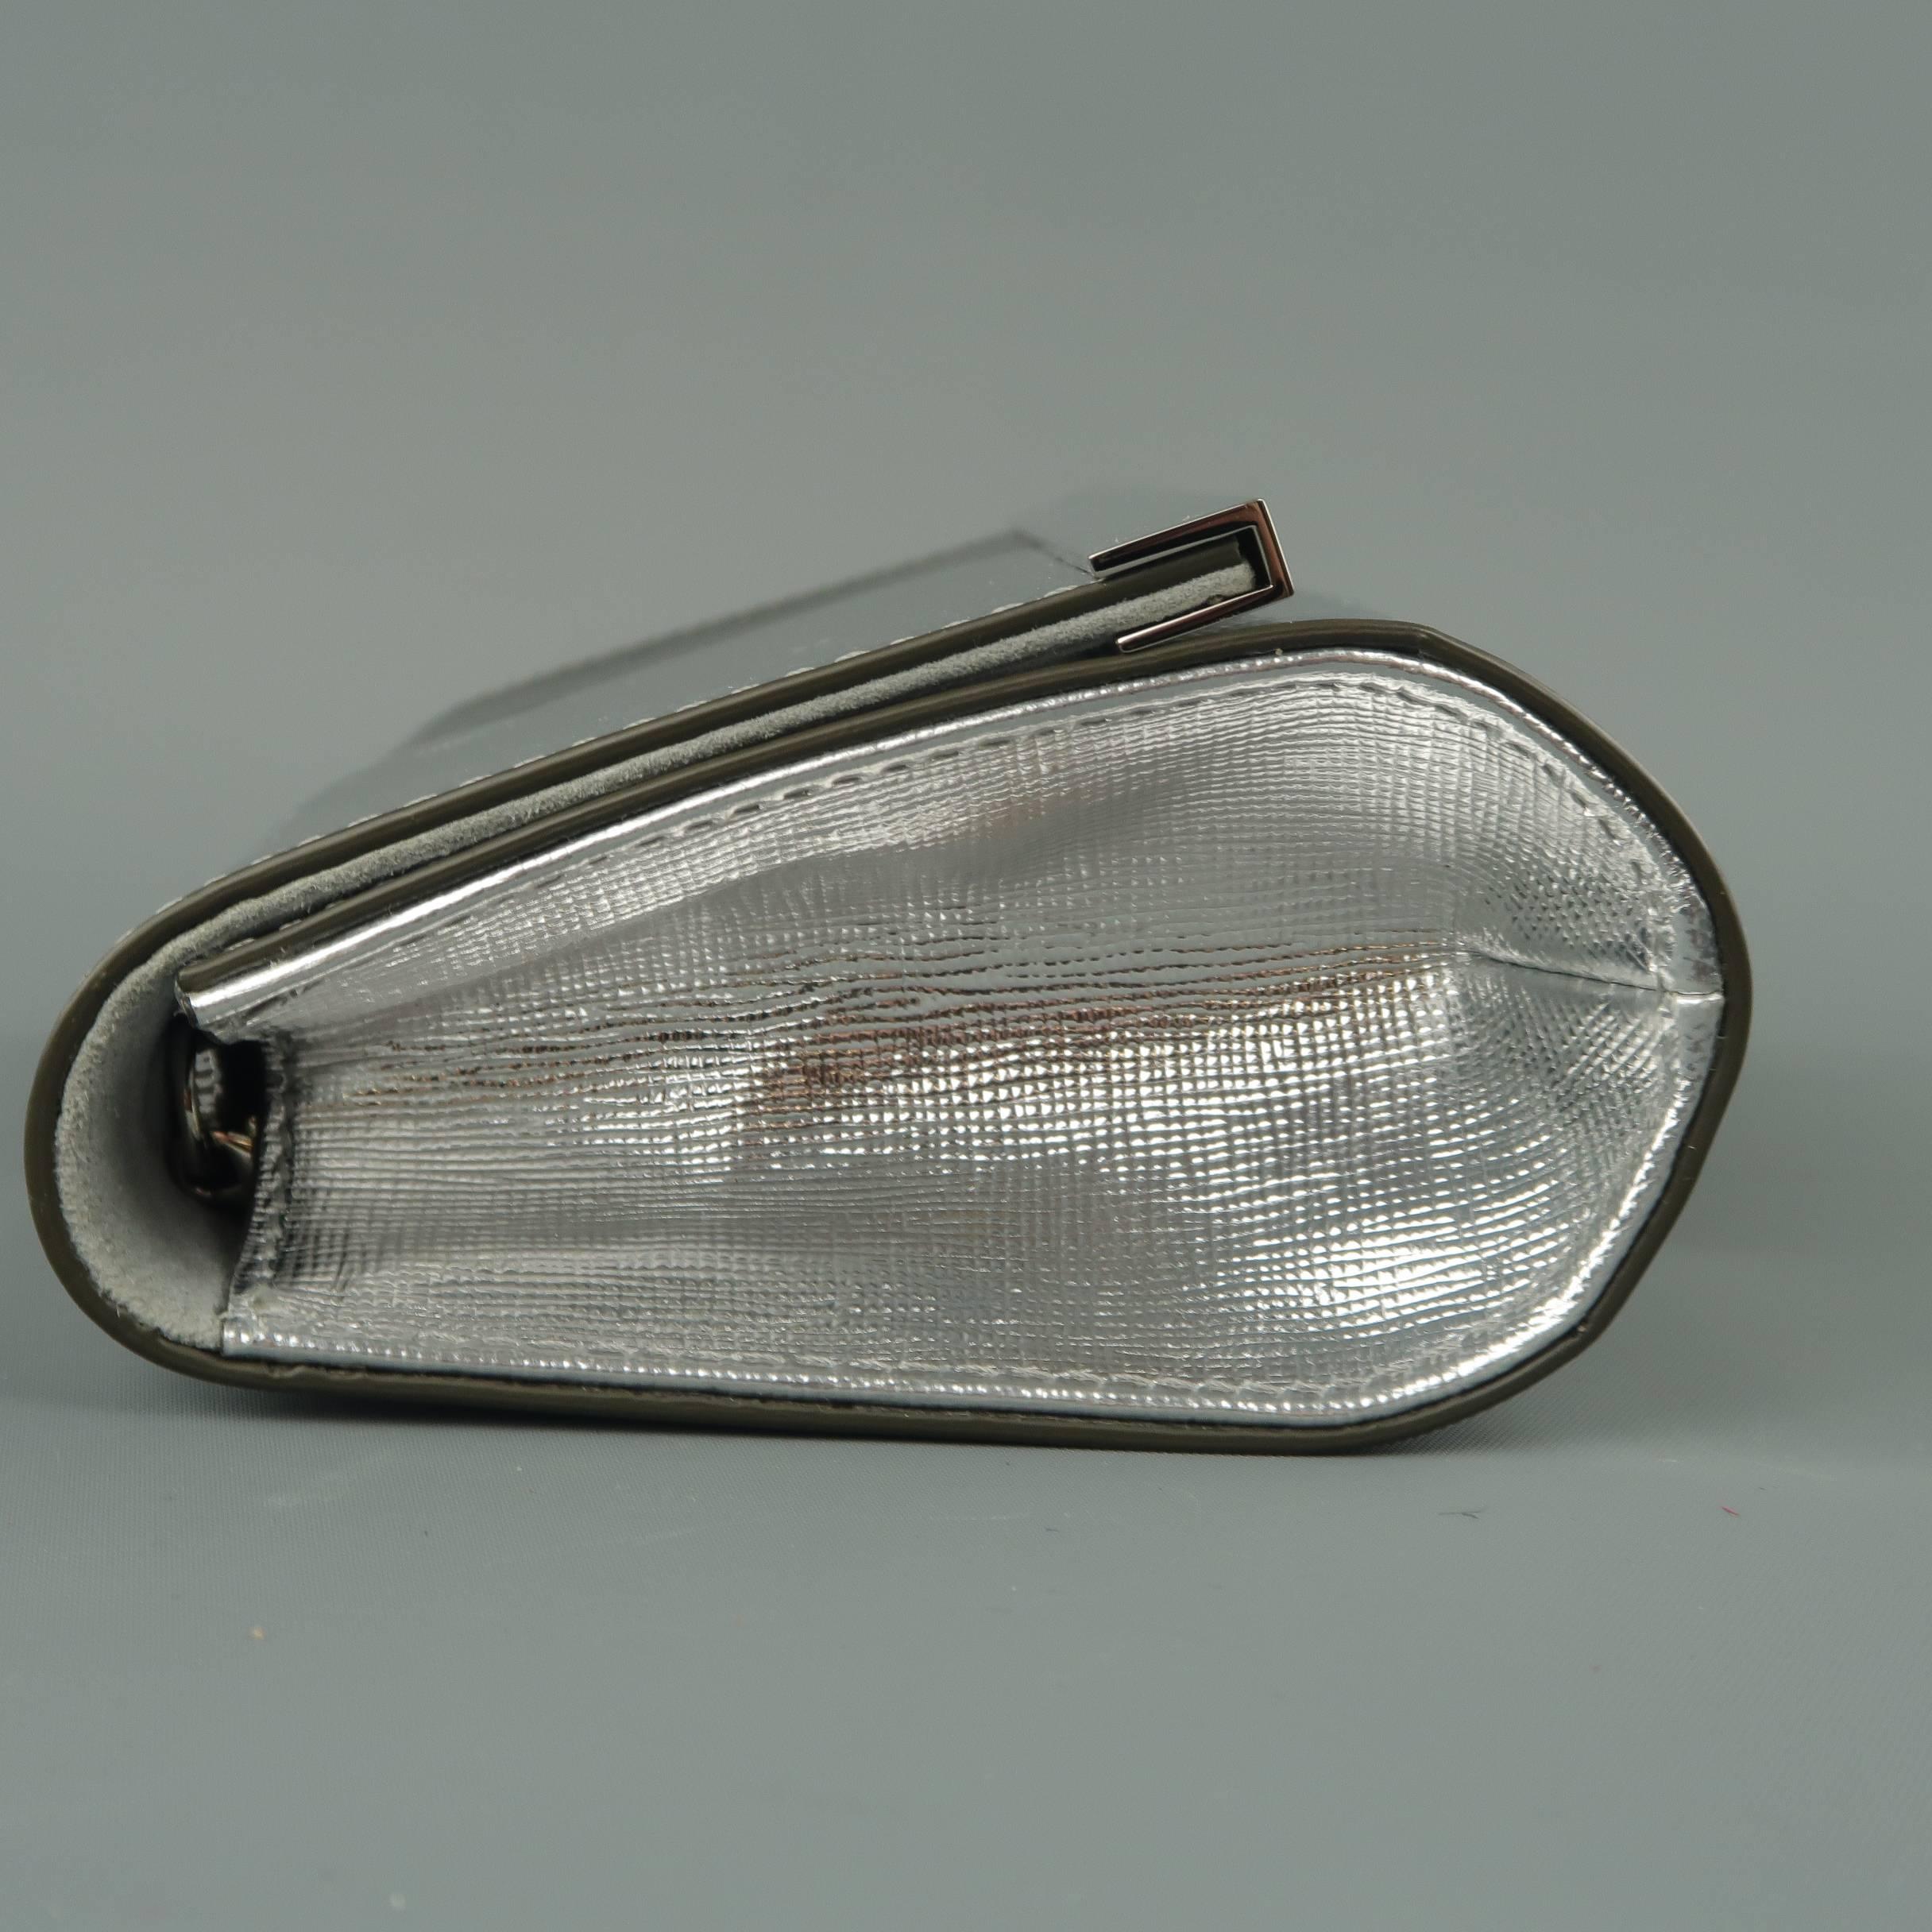 Women's FENDI Two Tone Metallic Silver Leather Evening Mini Rush Clutch Handbag